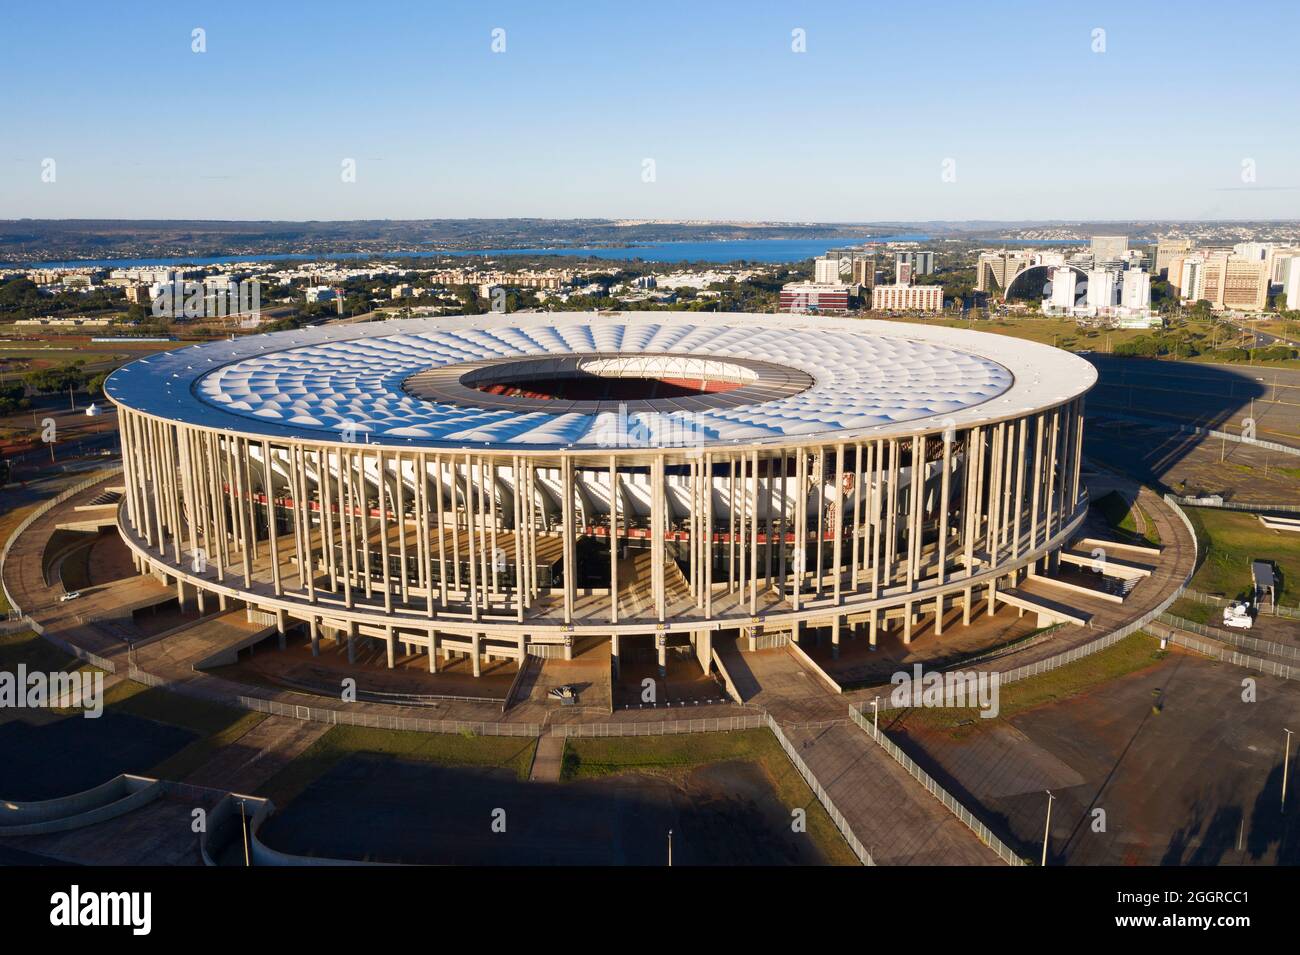 Estádio Nacional Mané Garrincha, un stade de football, Brasilia, Brésil Banque D'Images